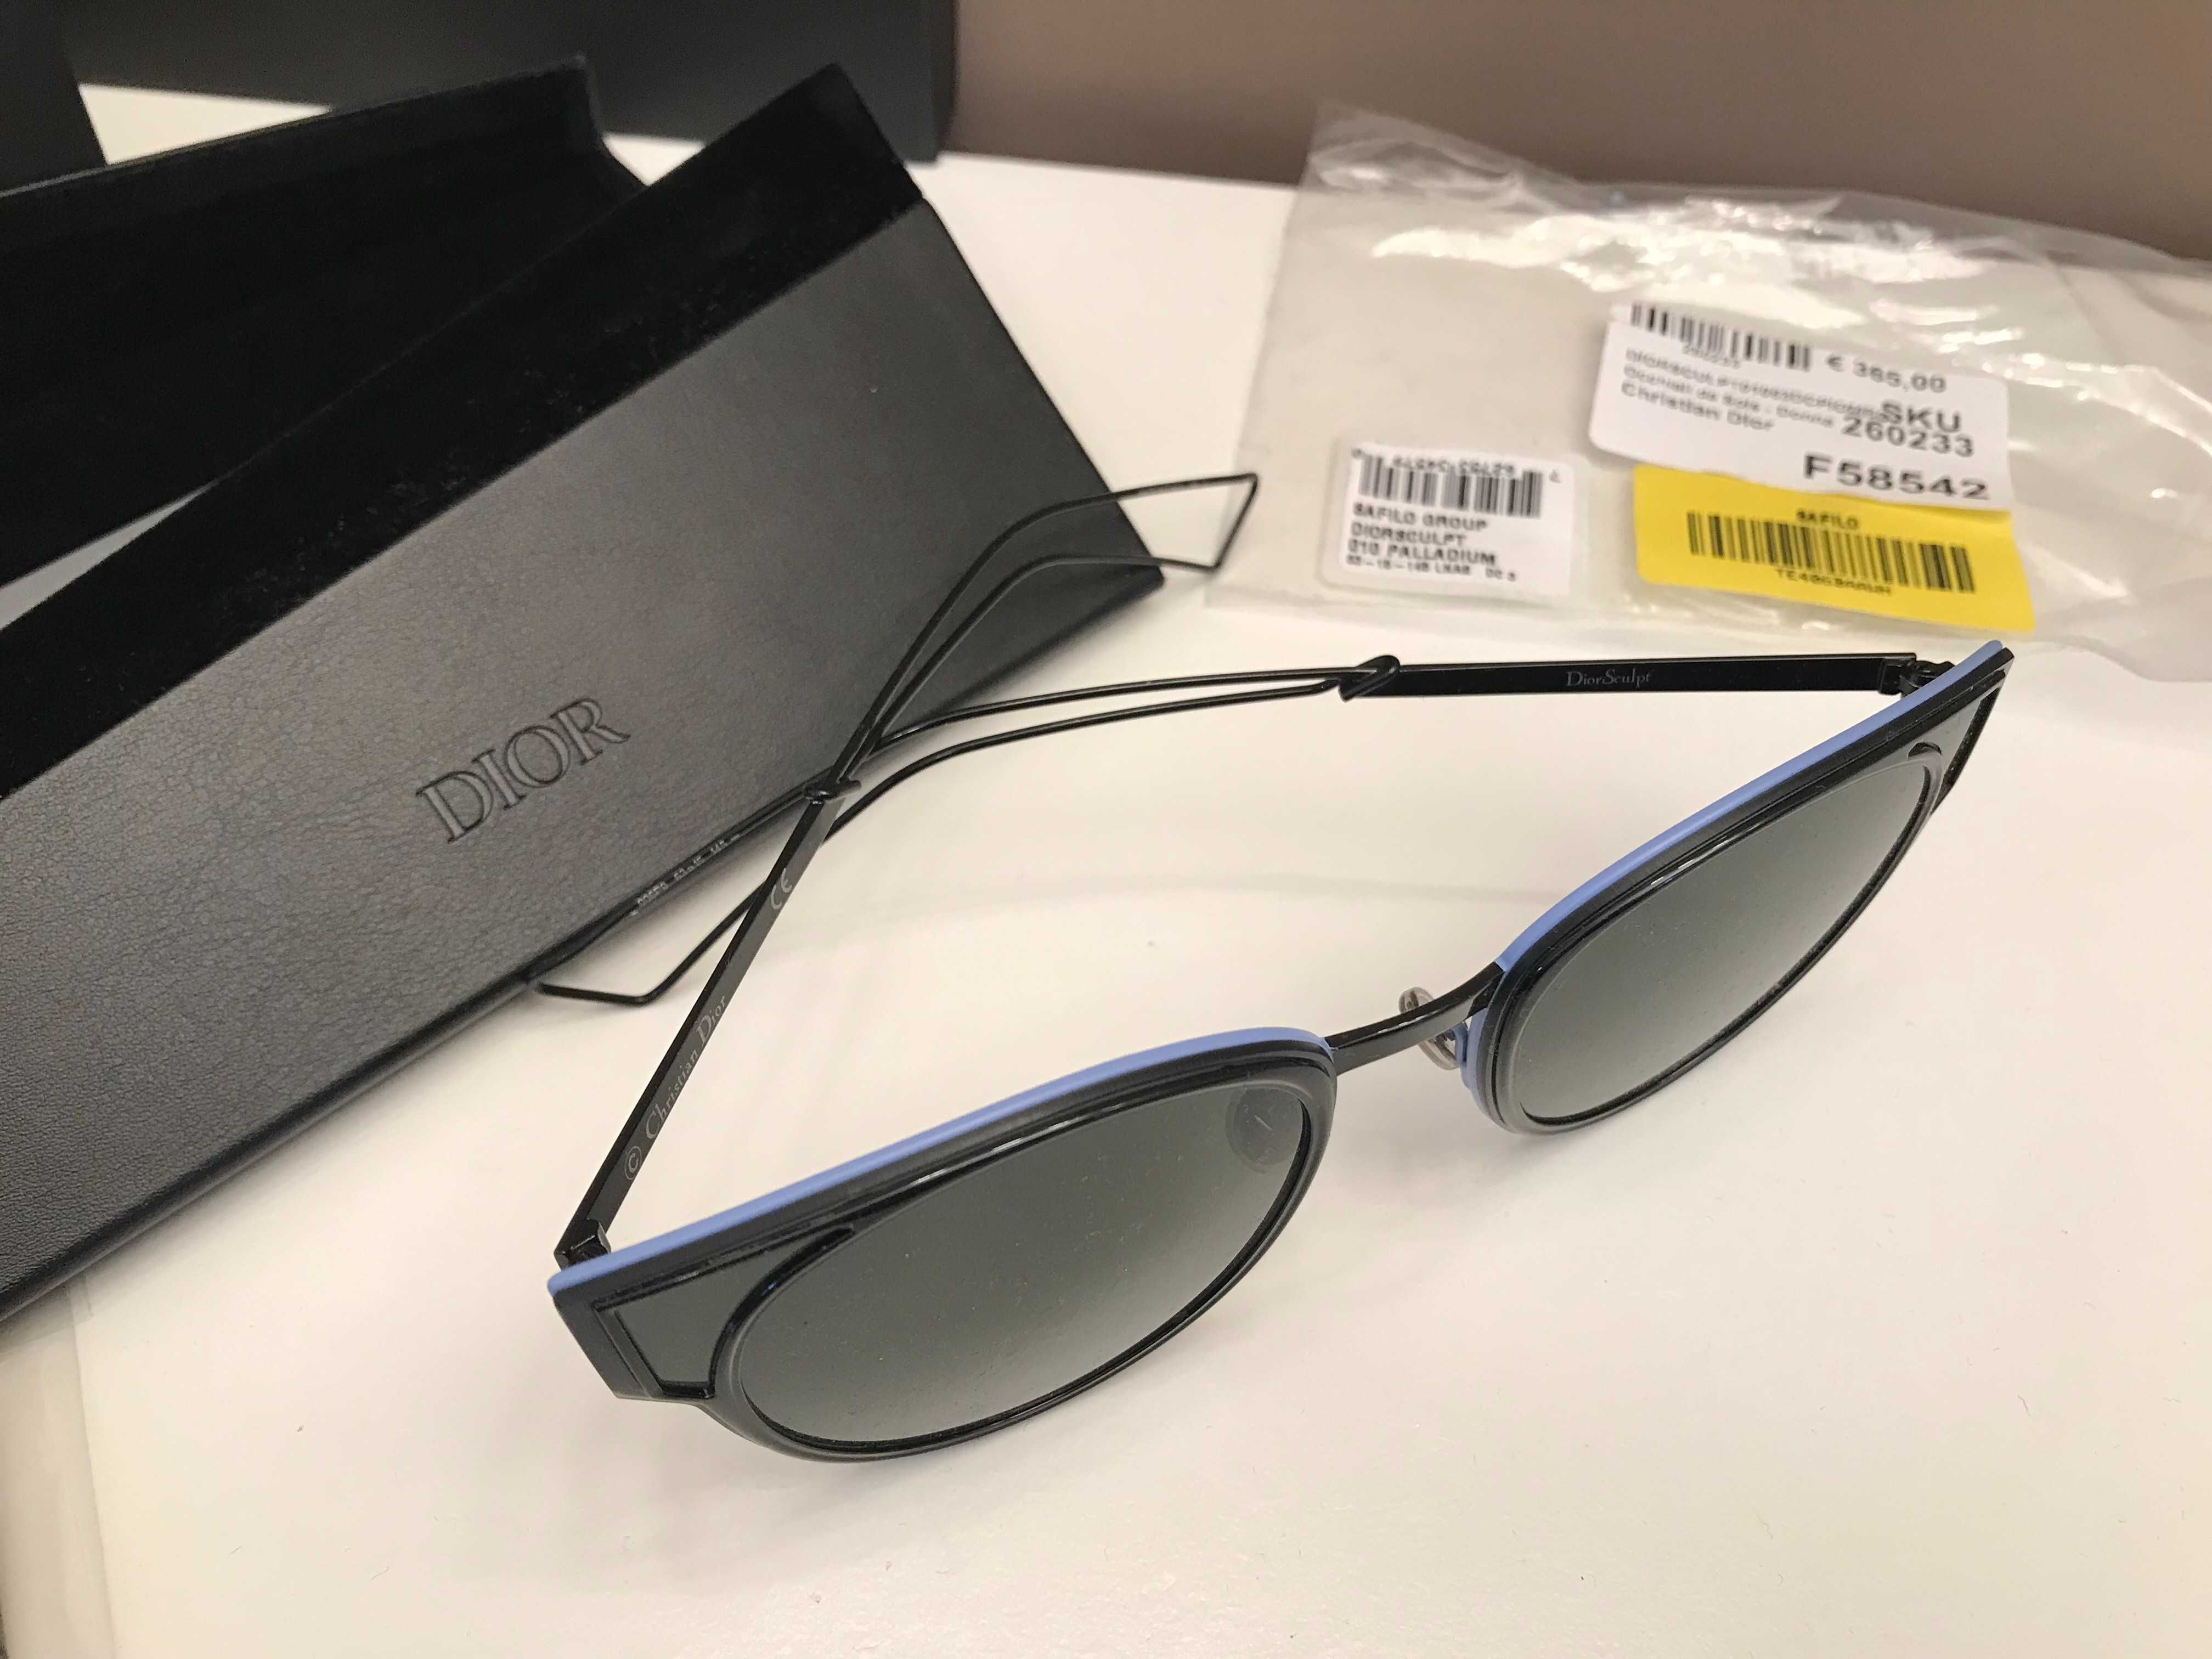 Dior ochelari soare, originali, full box, retail 400 euro